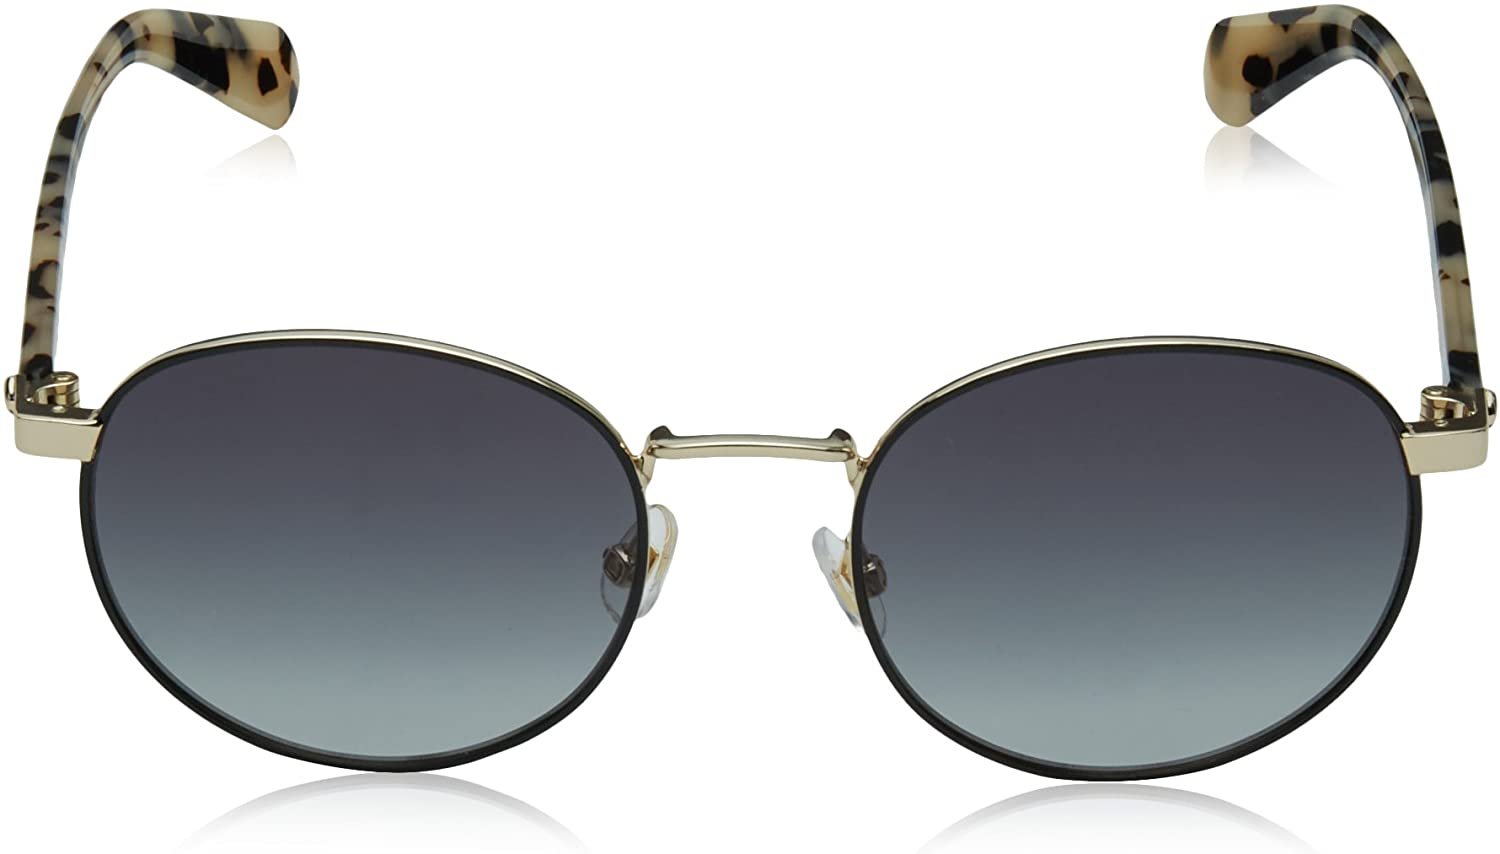 Kate Spade New York Women's Adelais Oval Sunglasses, BLK HAVAN, 50 mm - image 2 of 4